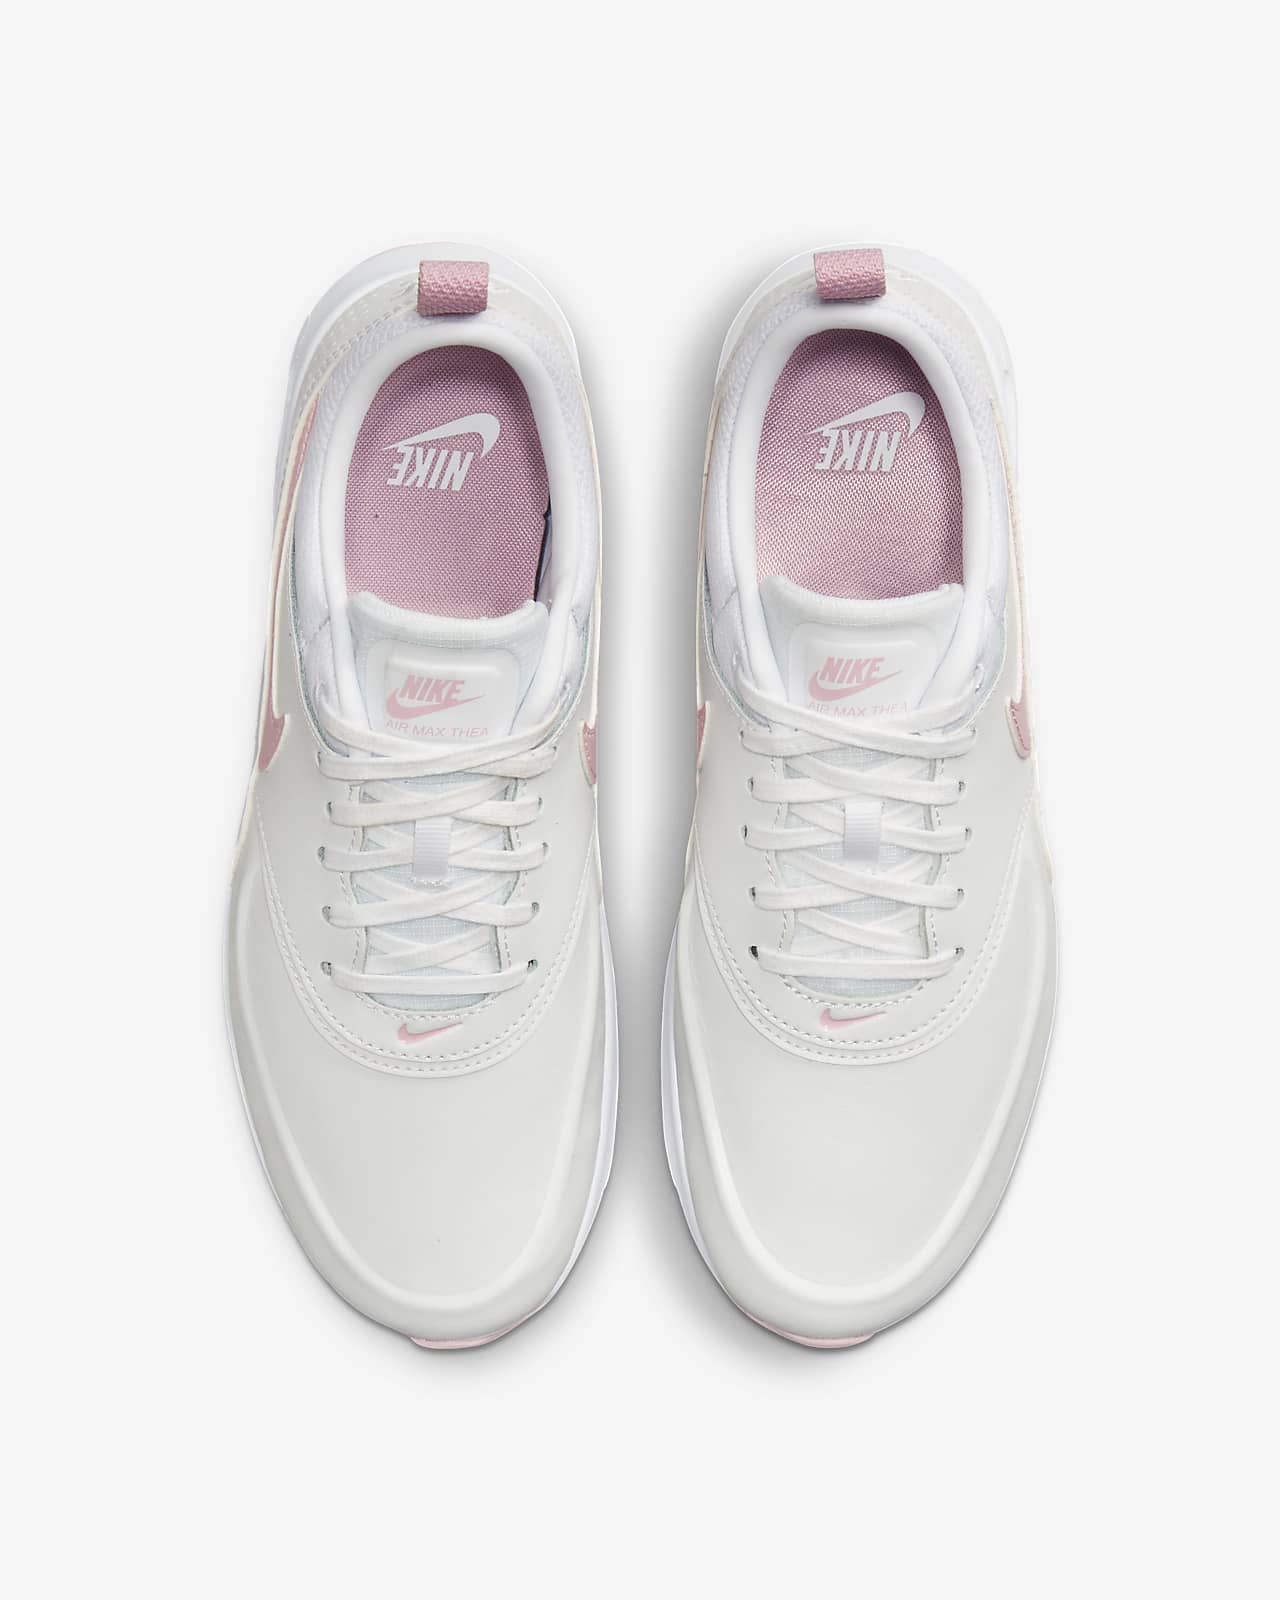 Talla parcialidad huevo Calzado para mujer Nike Air Max Thea Premium. Nike.com